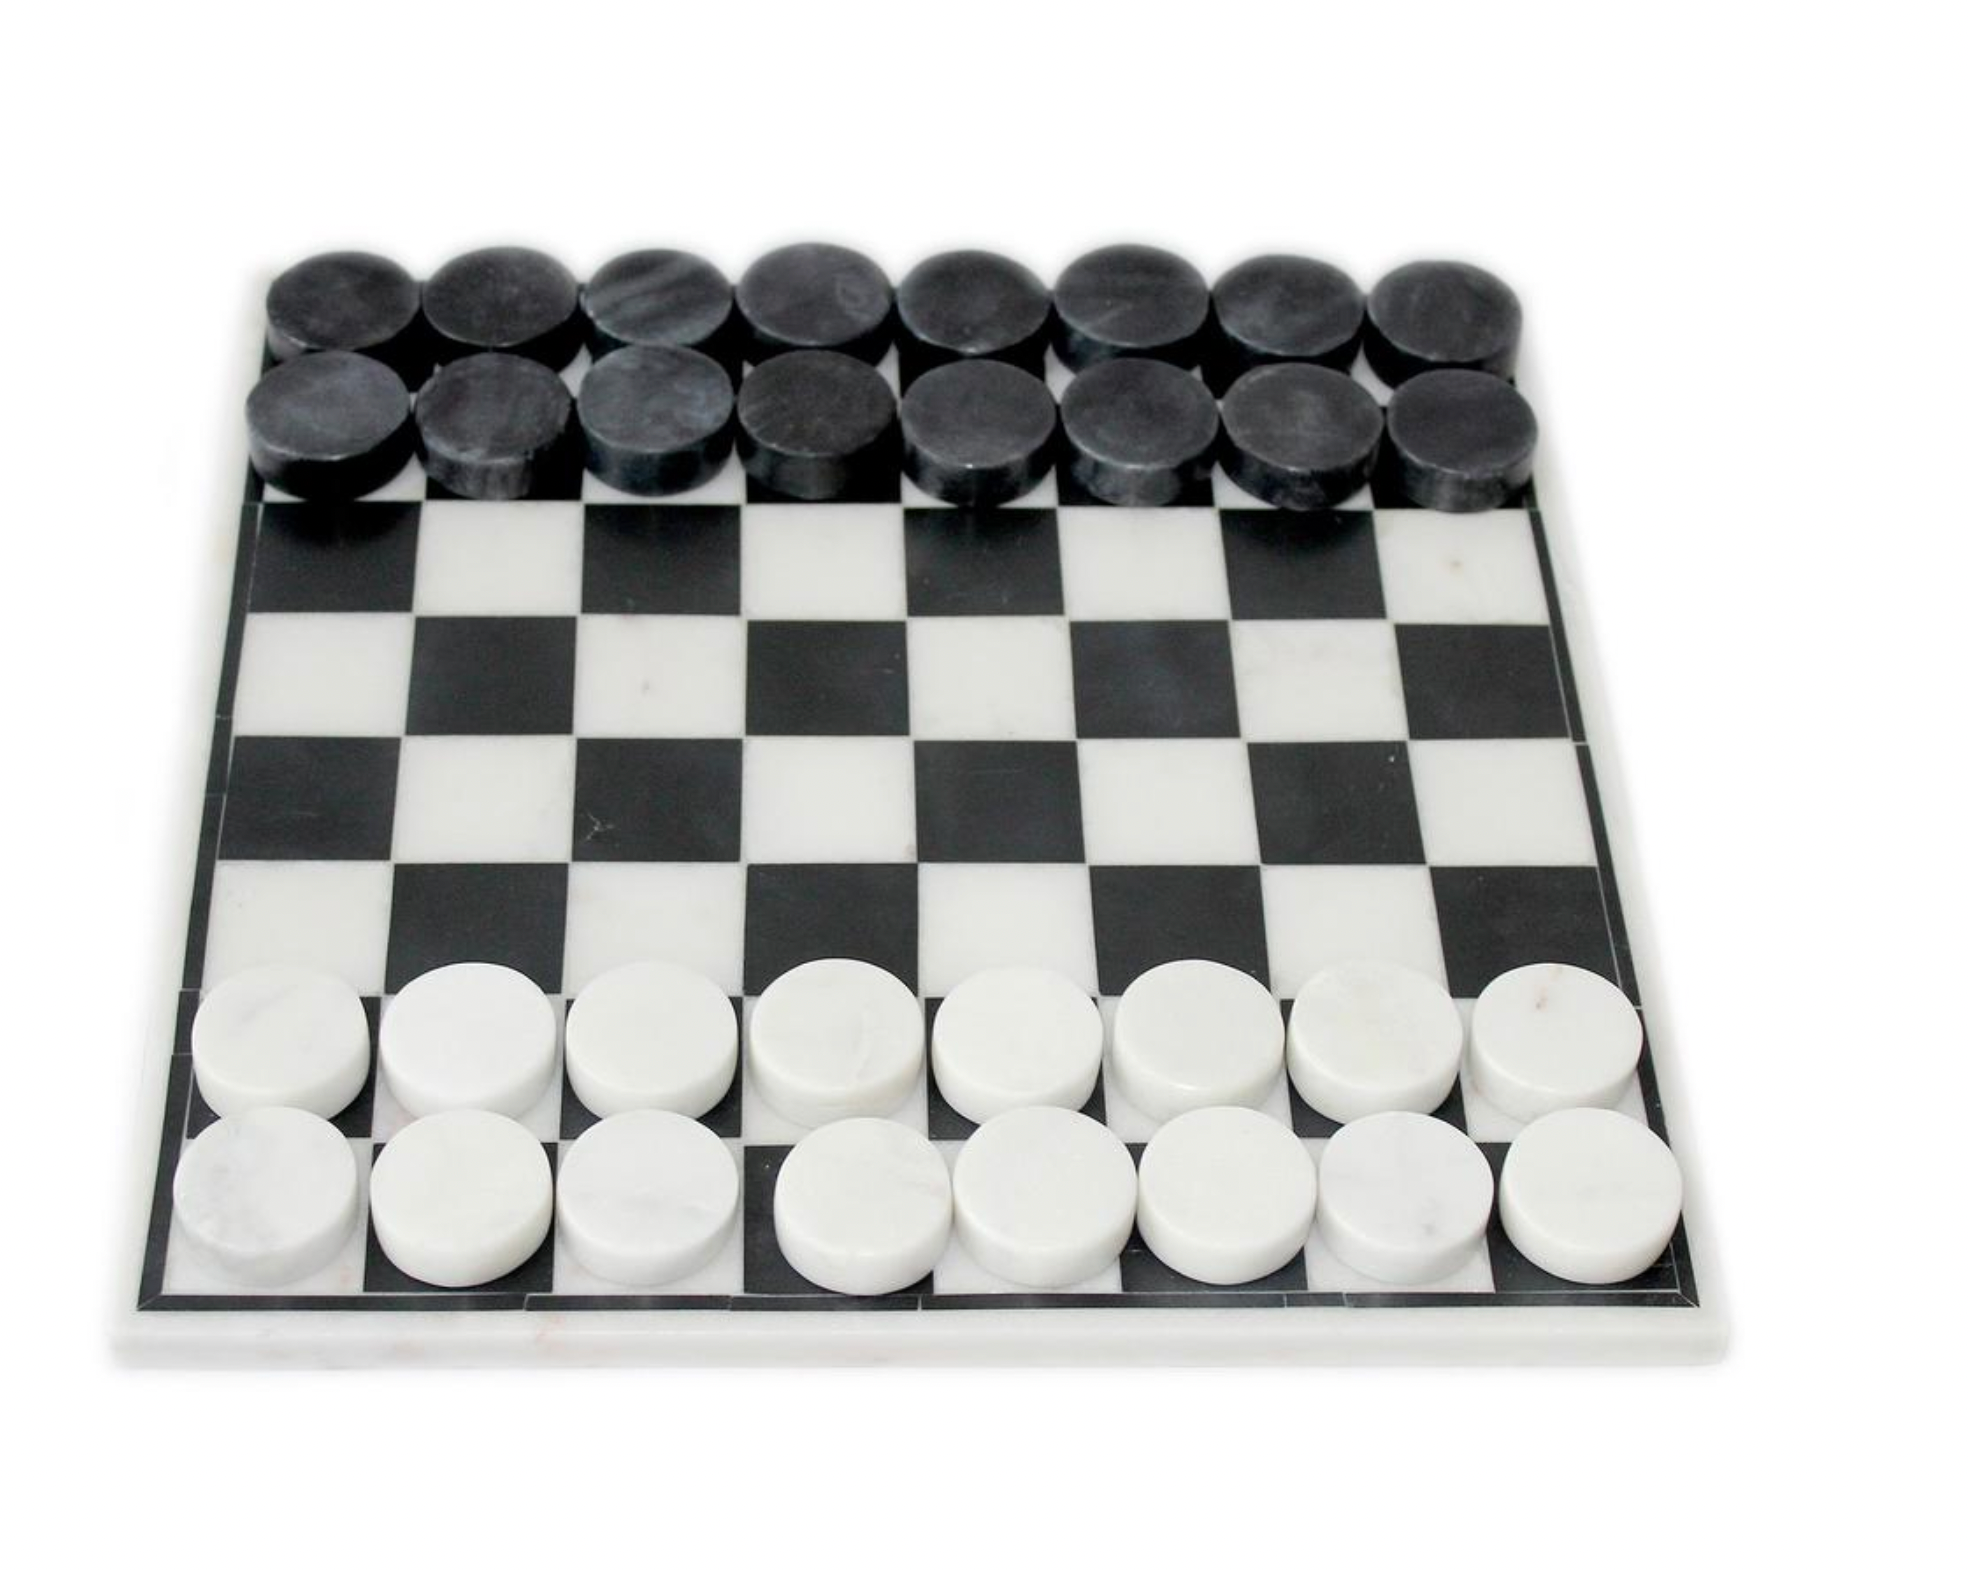 Board Game White/Black